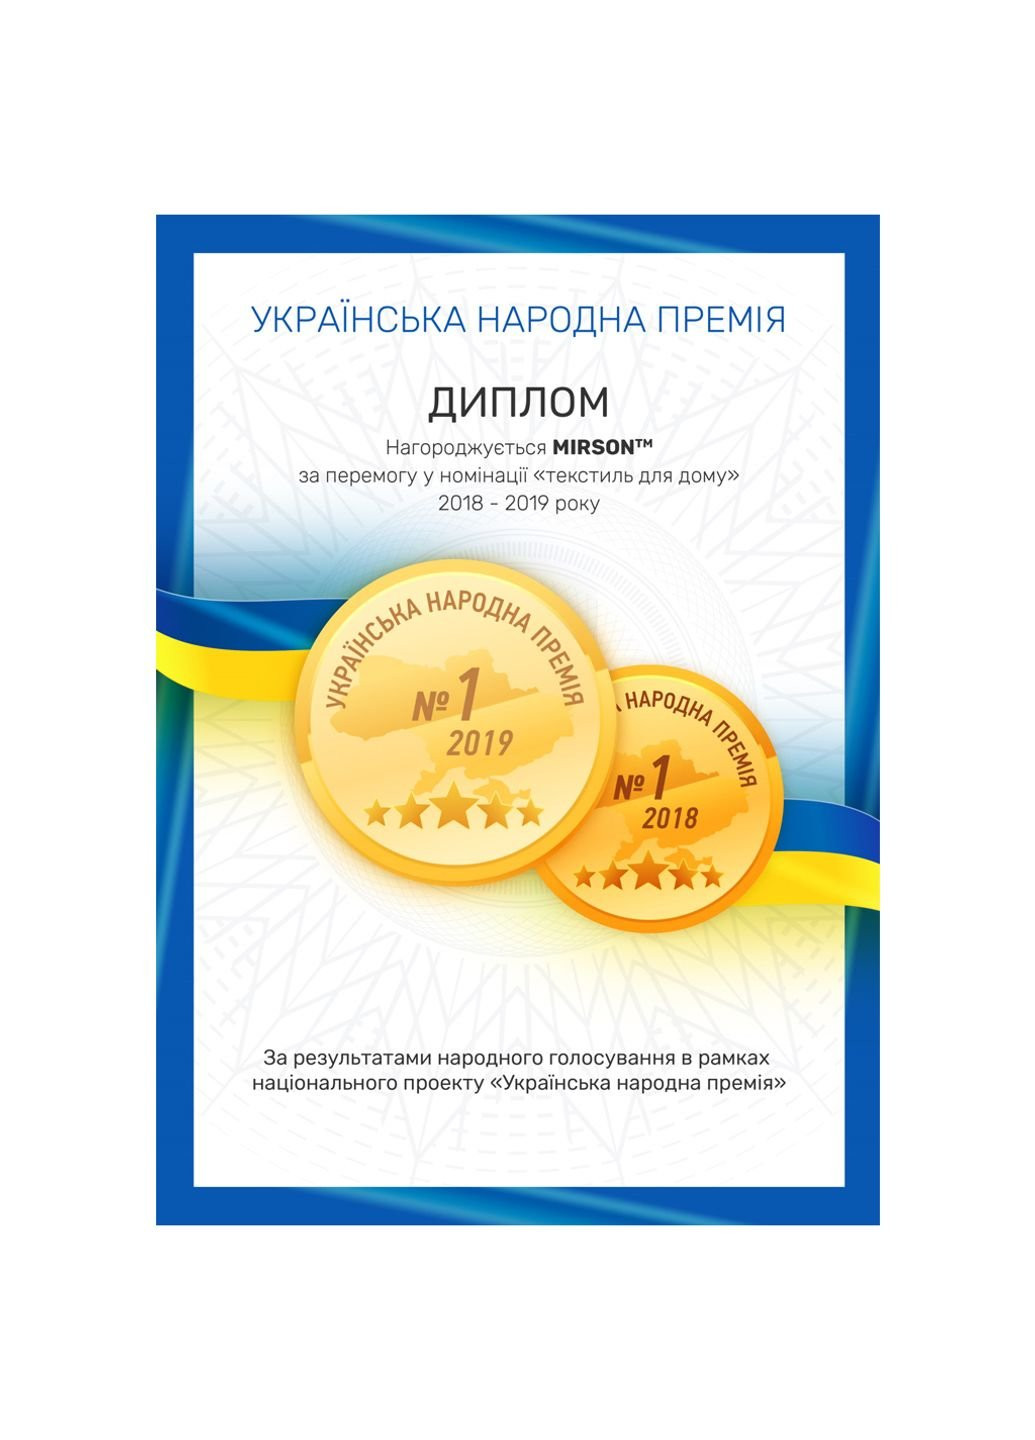 Mirson полотенце набор банный №5005 softness ivory 50x90, 70x140 (2200003182972) молочный производство - Украина